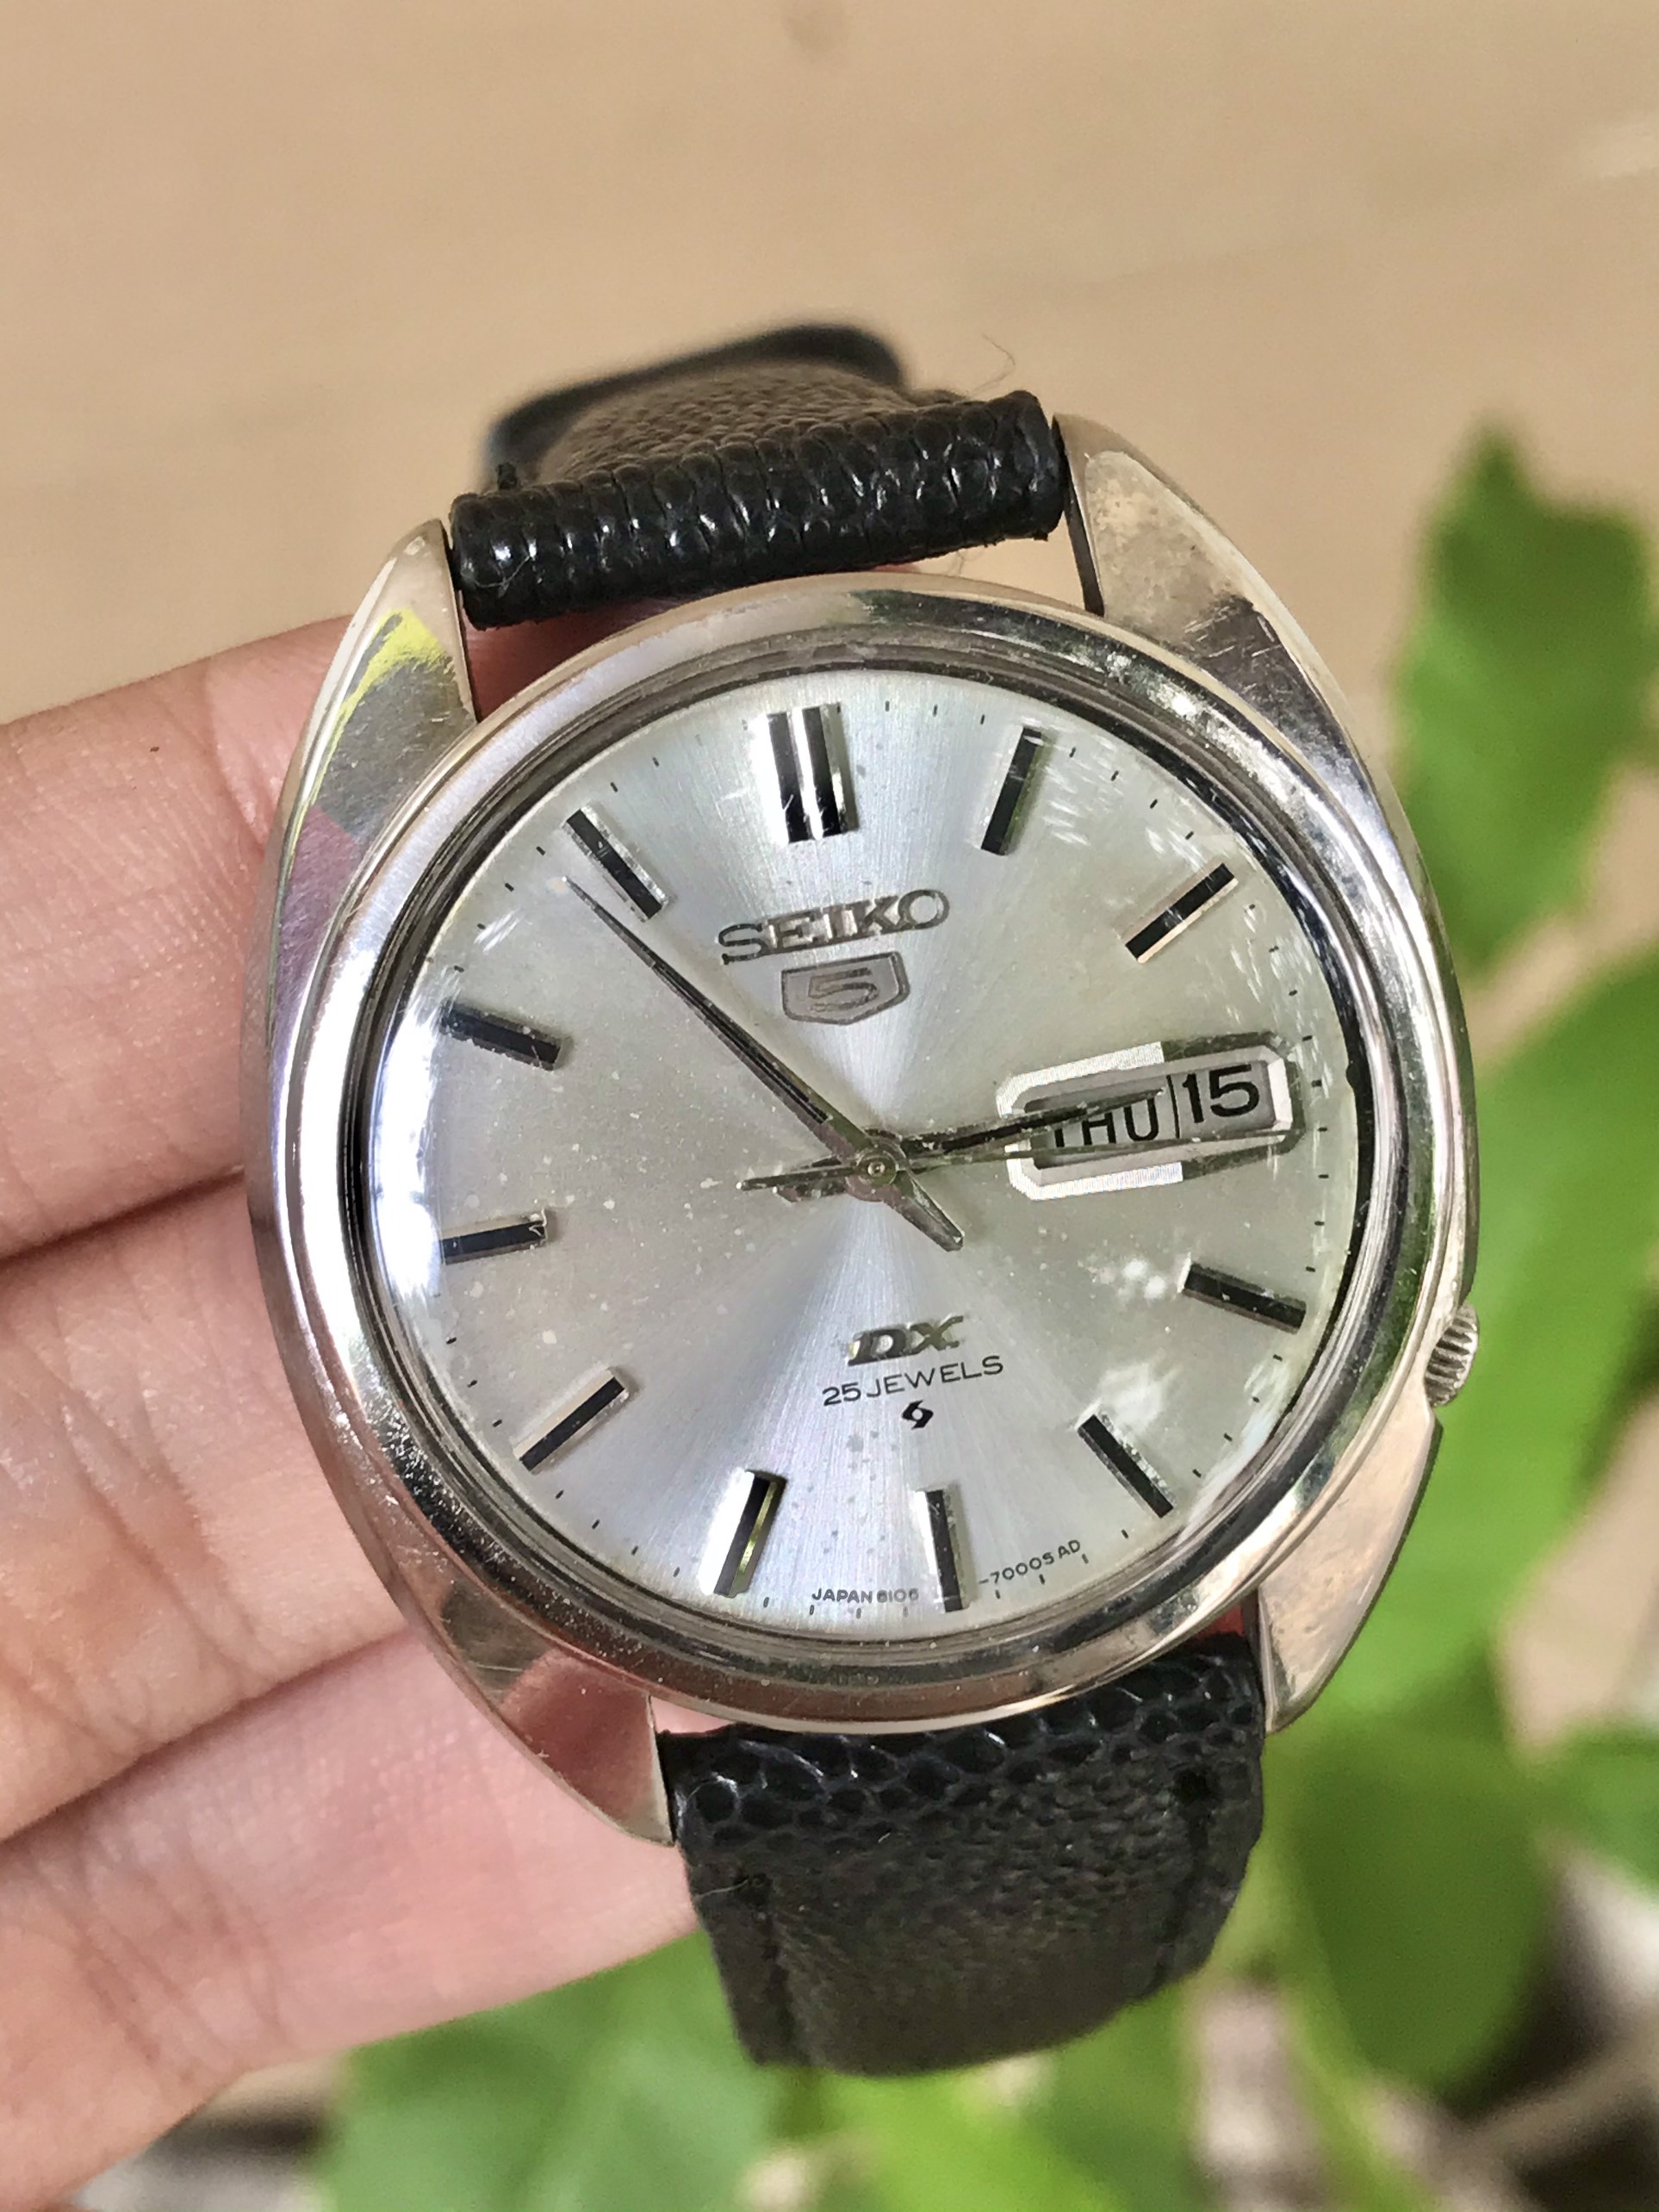 HCM]Đồng hồ nam SEIKO 5 DX 25 Jewels - của Nhật 